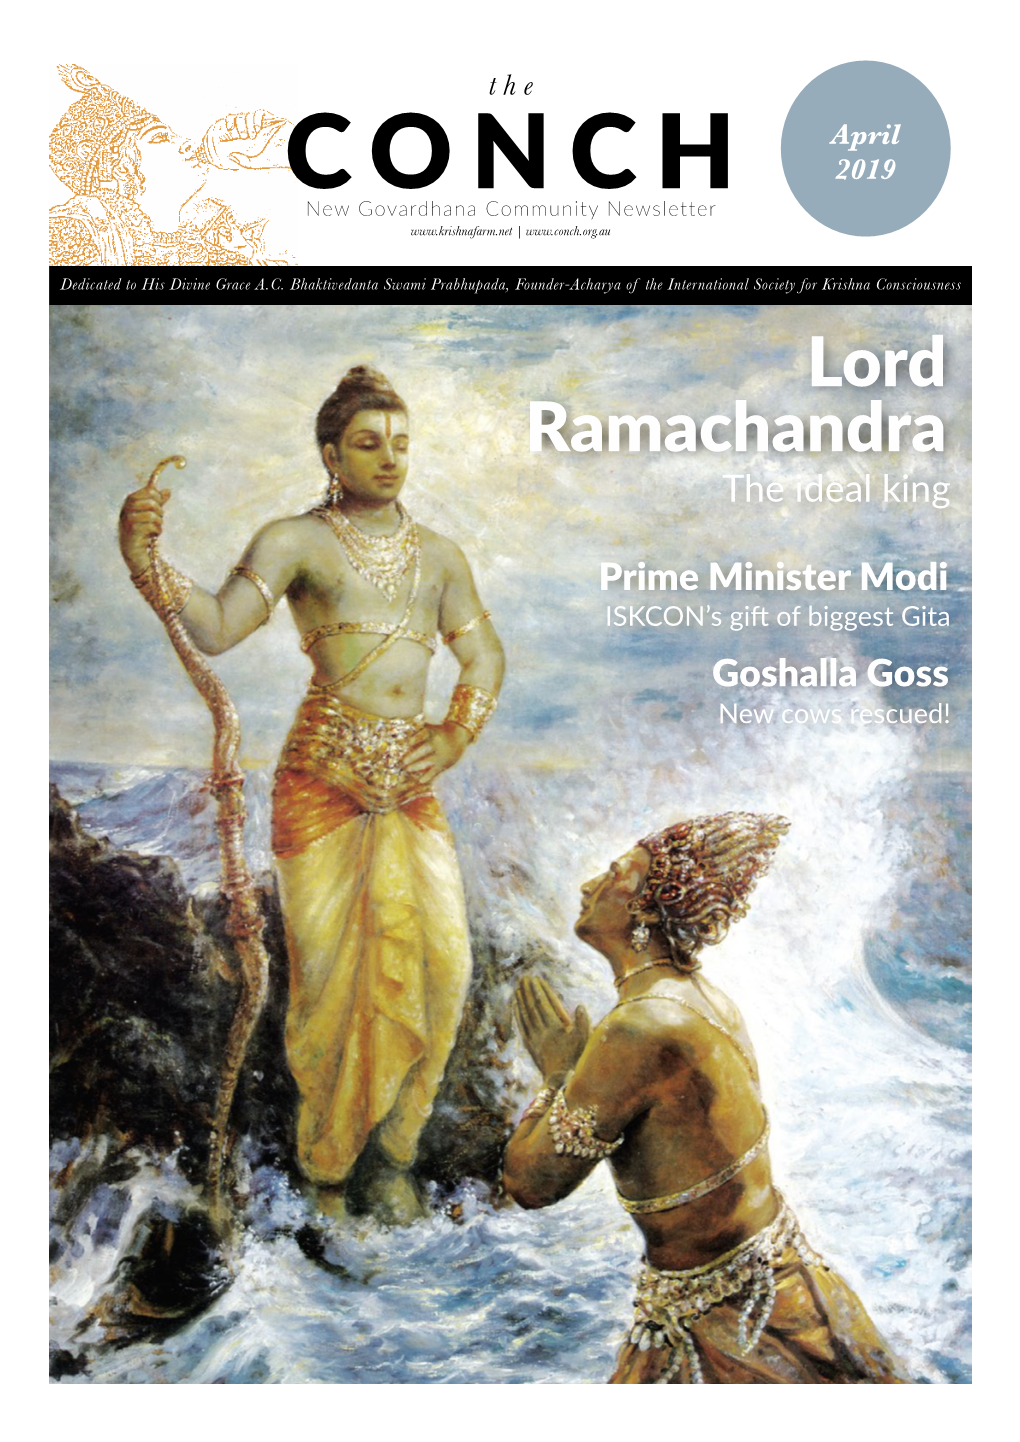 Lord Ramachandra the Ideal King